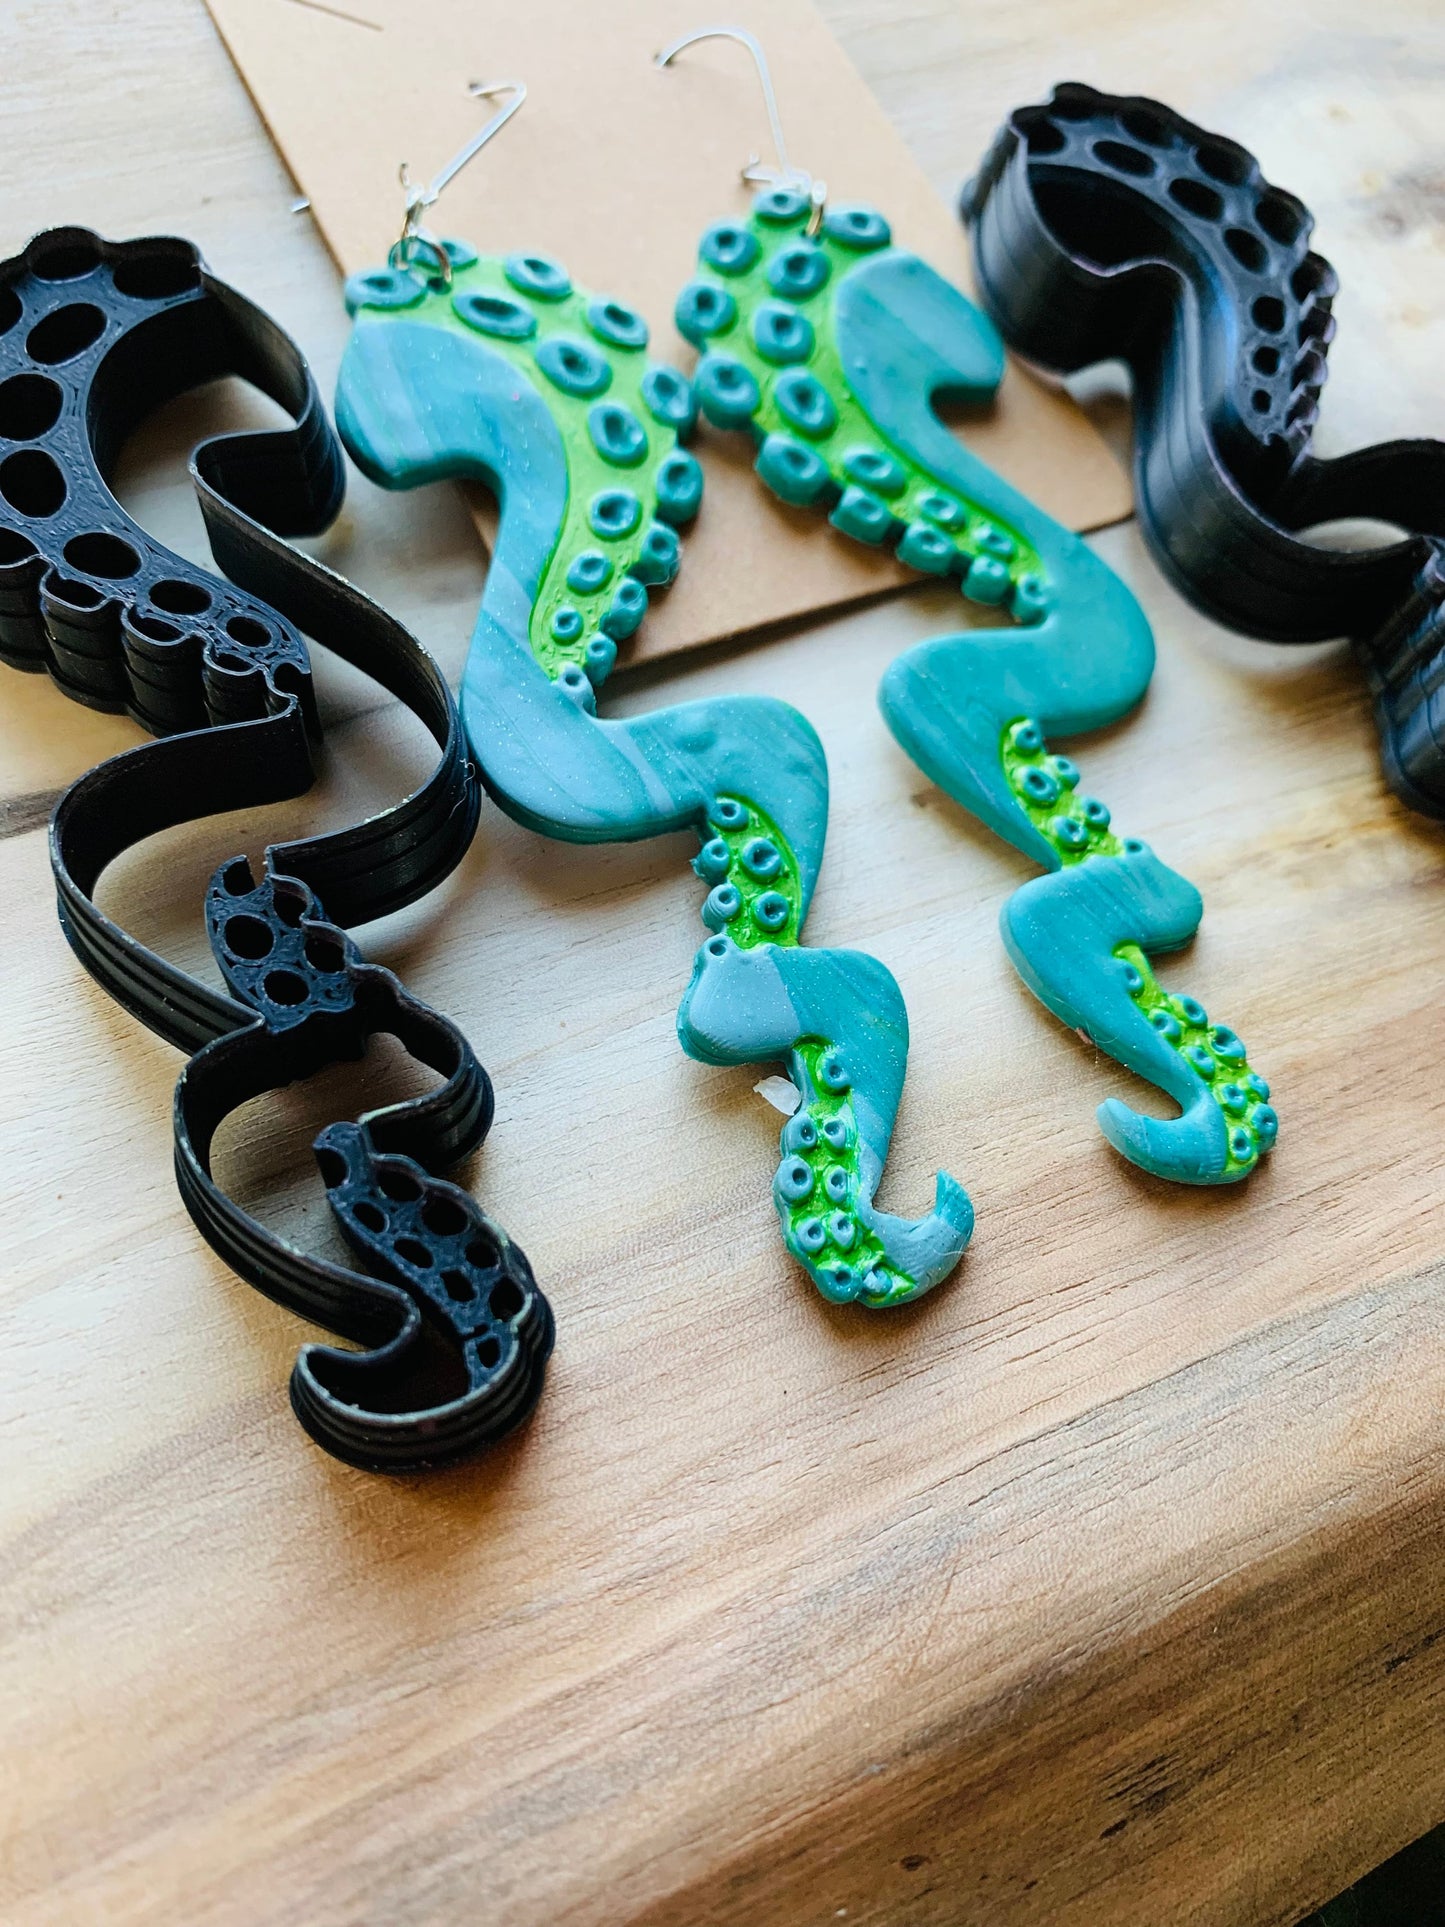 XL Octopus Tentacle Pair Sharp Clay Cutter